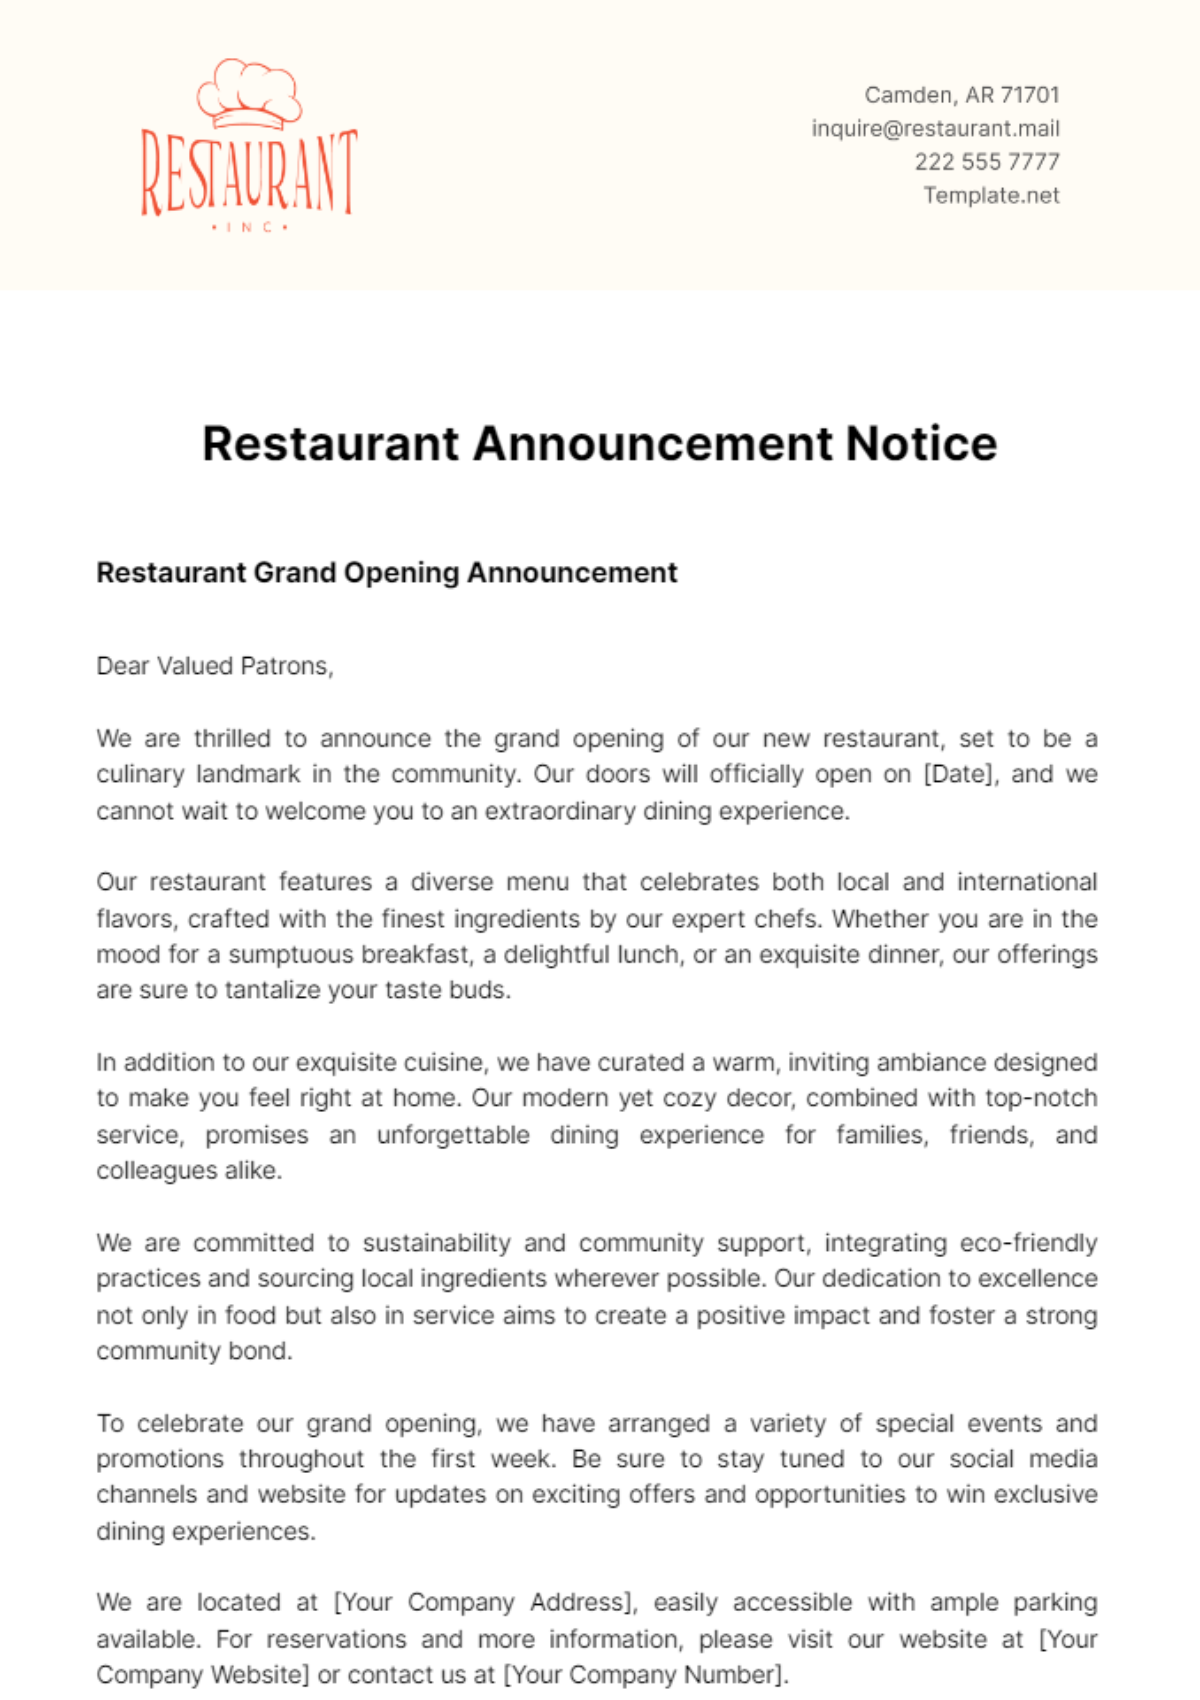 Restaurant Announcement Notice Template